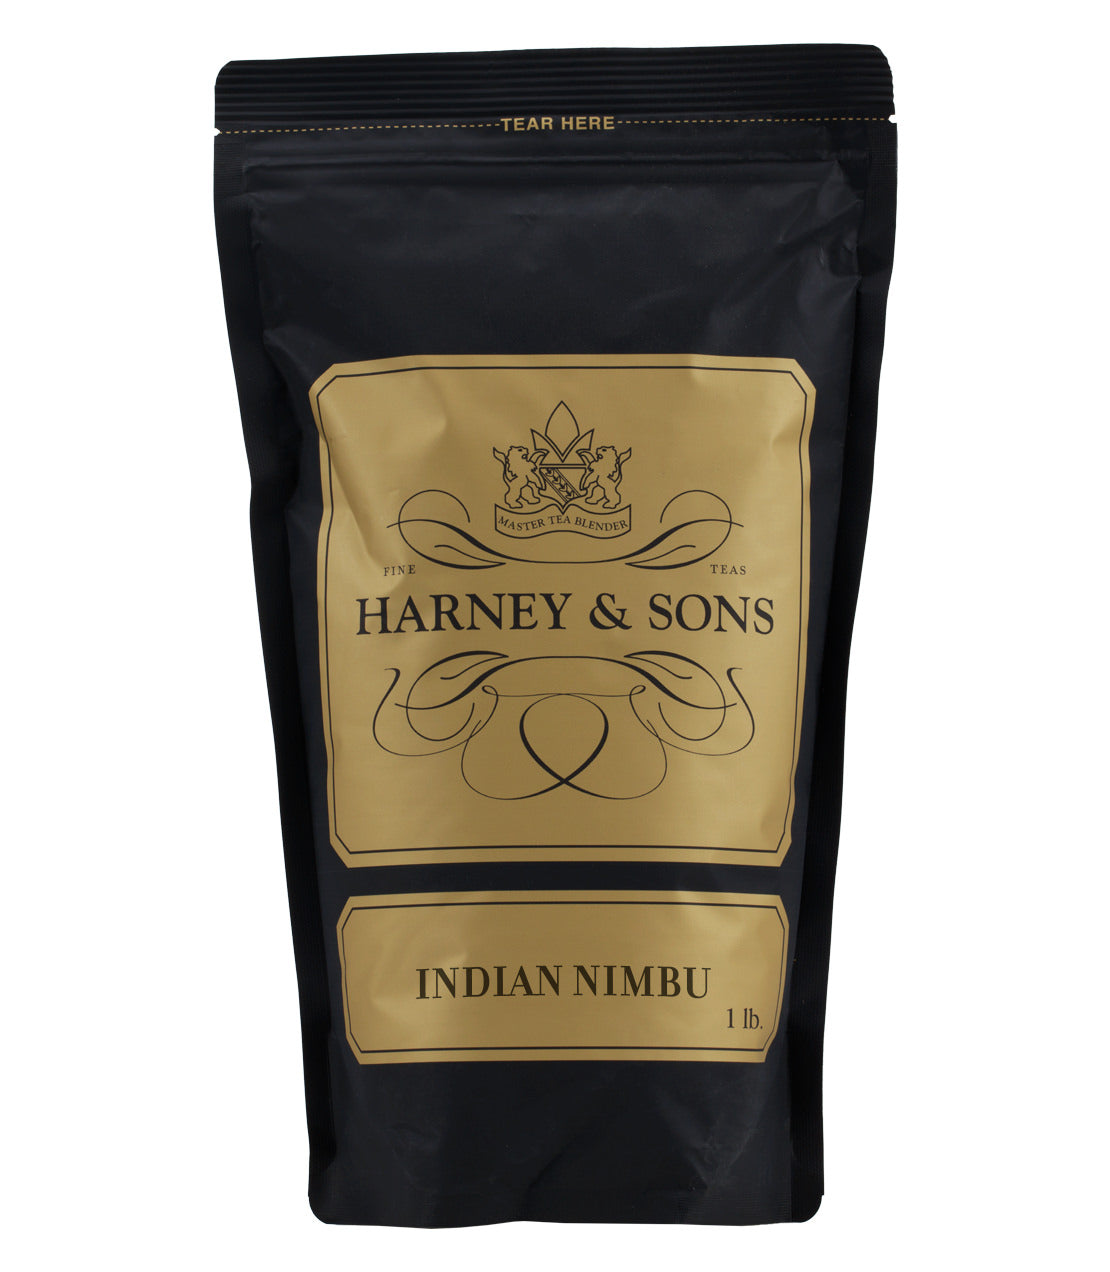 Indian Nimbu - Loose 1 lb. Bag - Harney & Sons Fine Teas